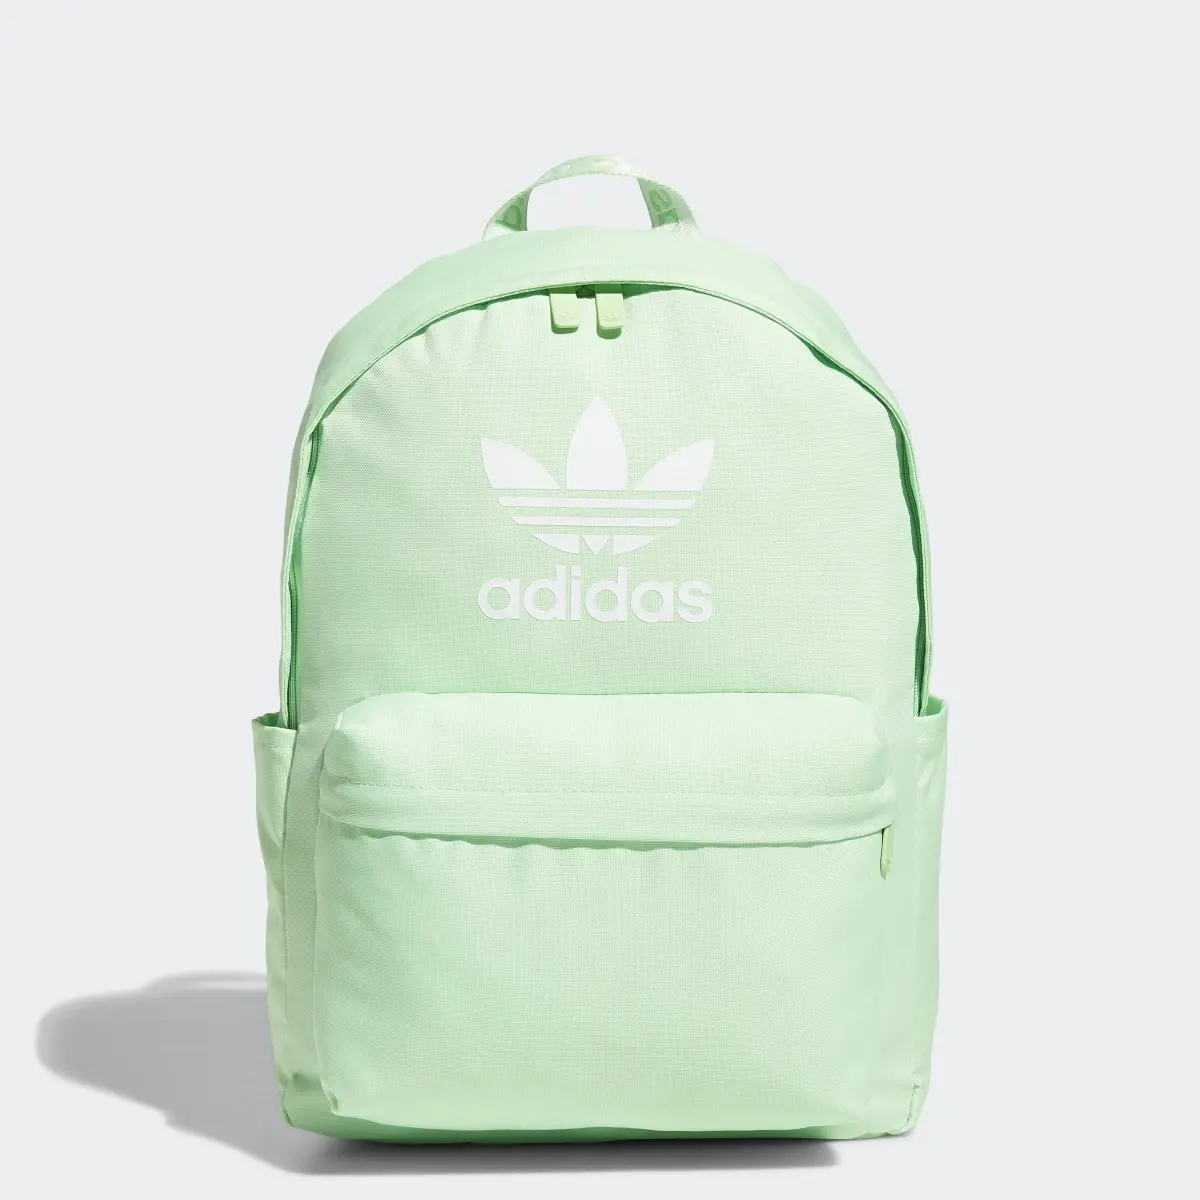 Adidas Adicolor Backpack. 1